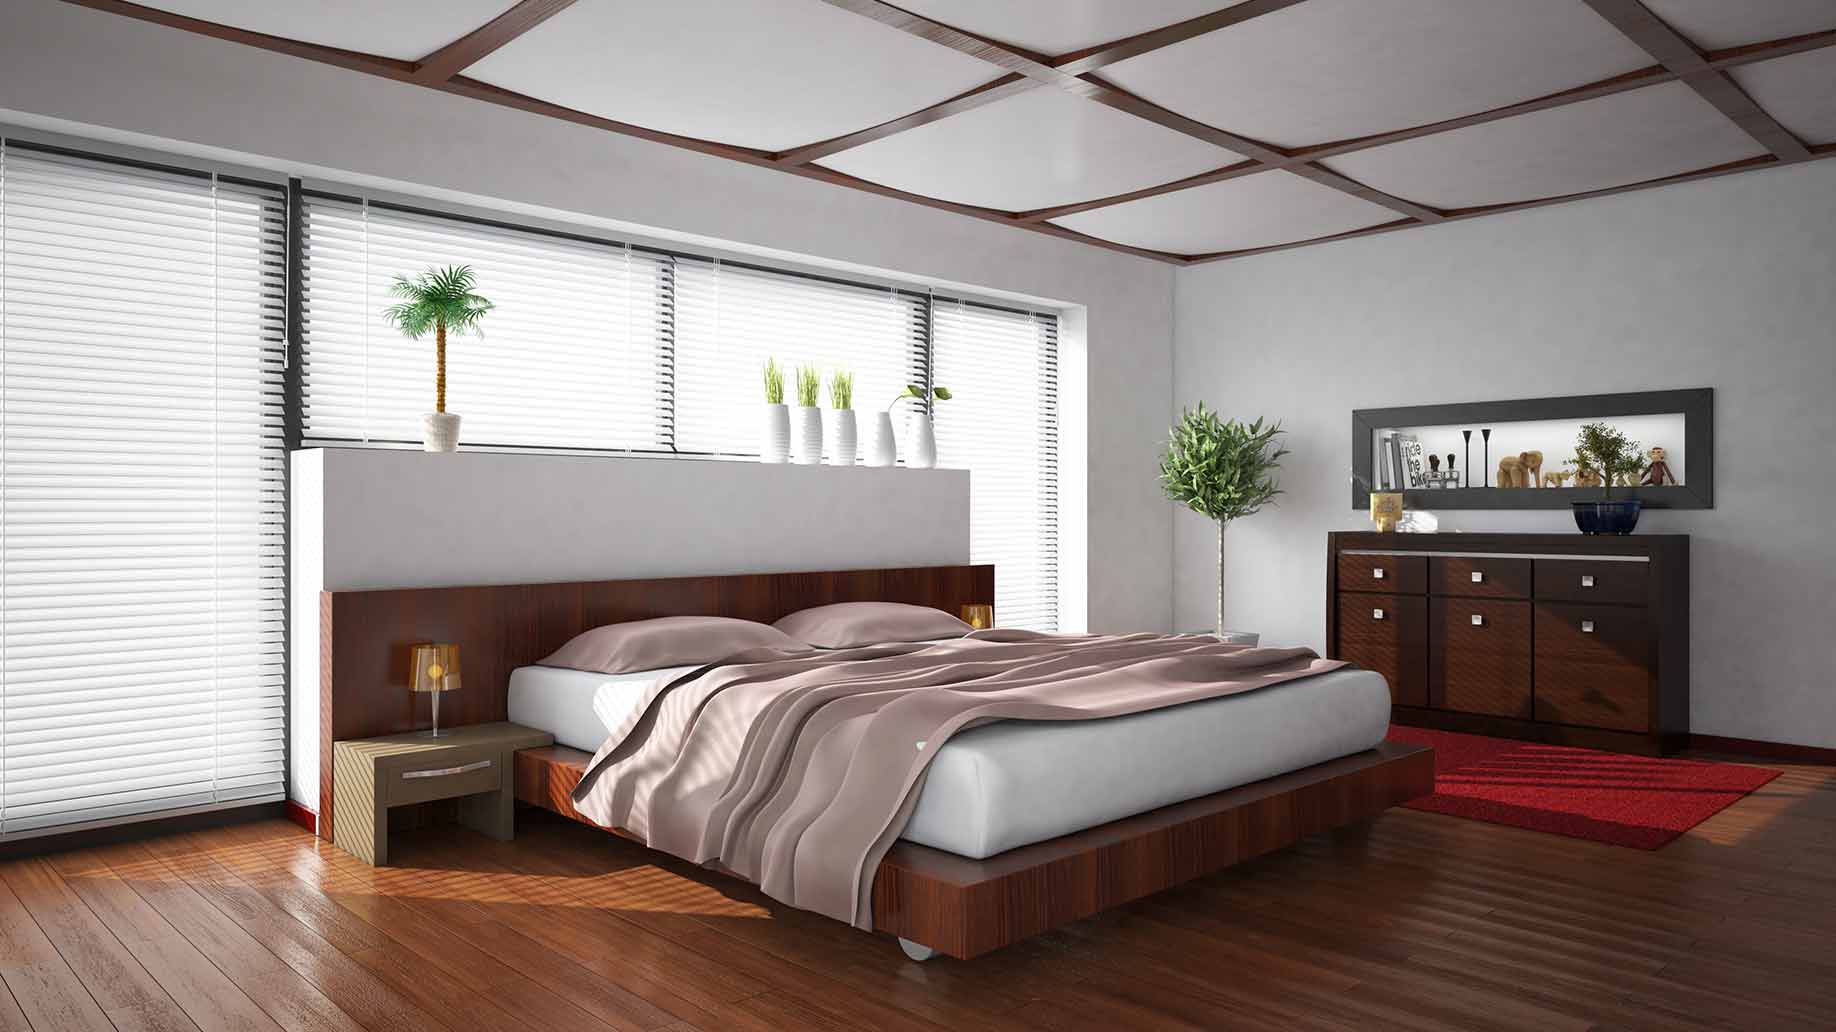 sleep better natural remedies optimize bedroom temperature light noise